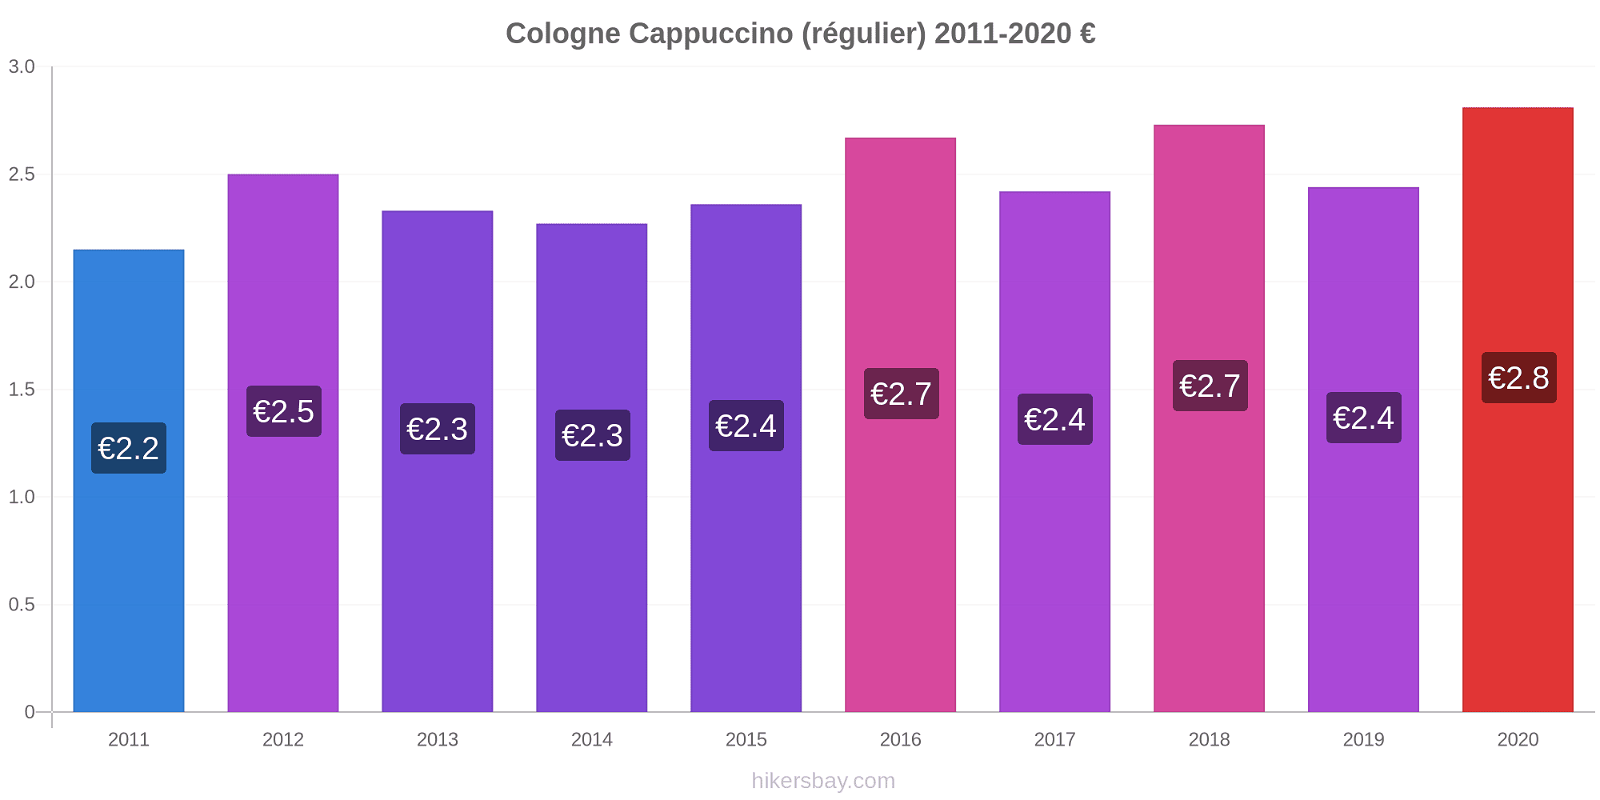 Cologne changements de prix Cappuccino (régulier) hikersbay.com